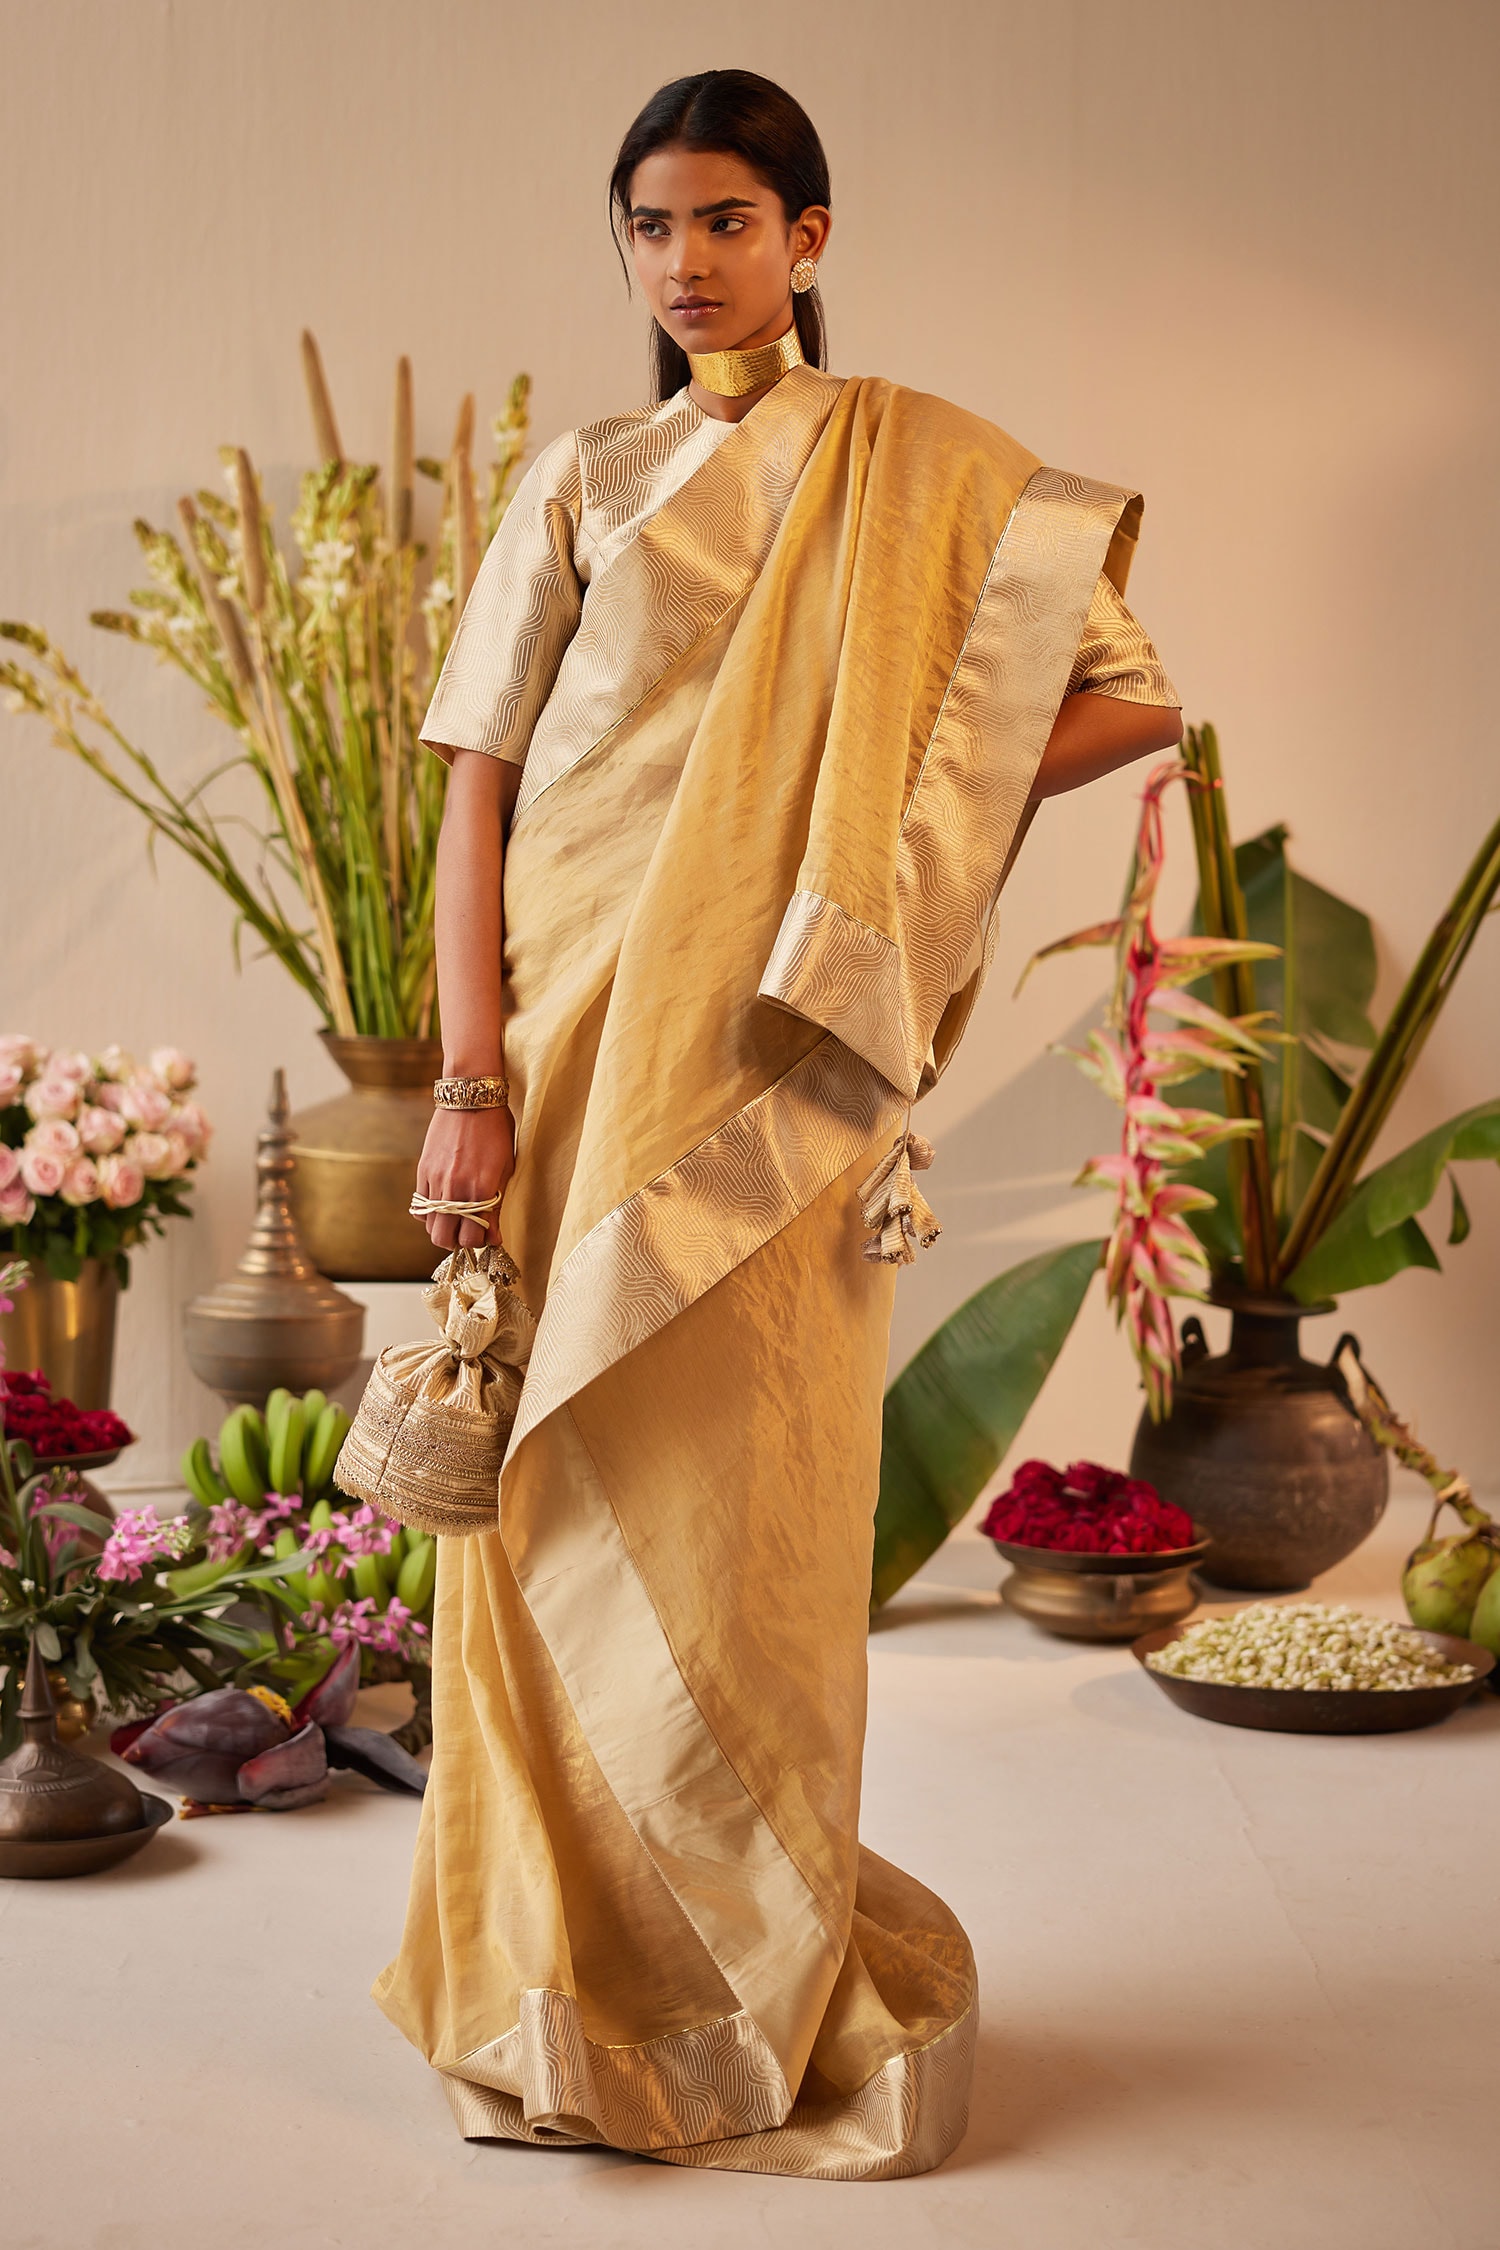 vastrang.in - Online Buy Sari, Salwar Suit, Gown, Lehengas, Kurti